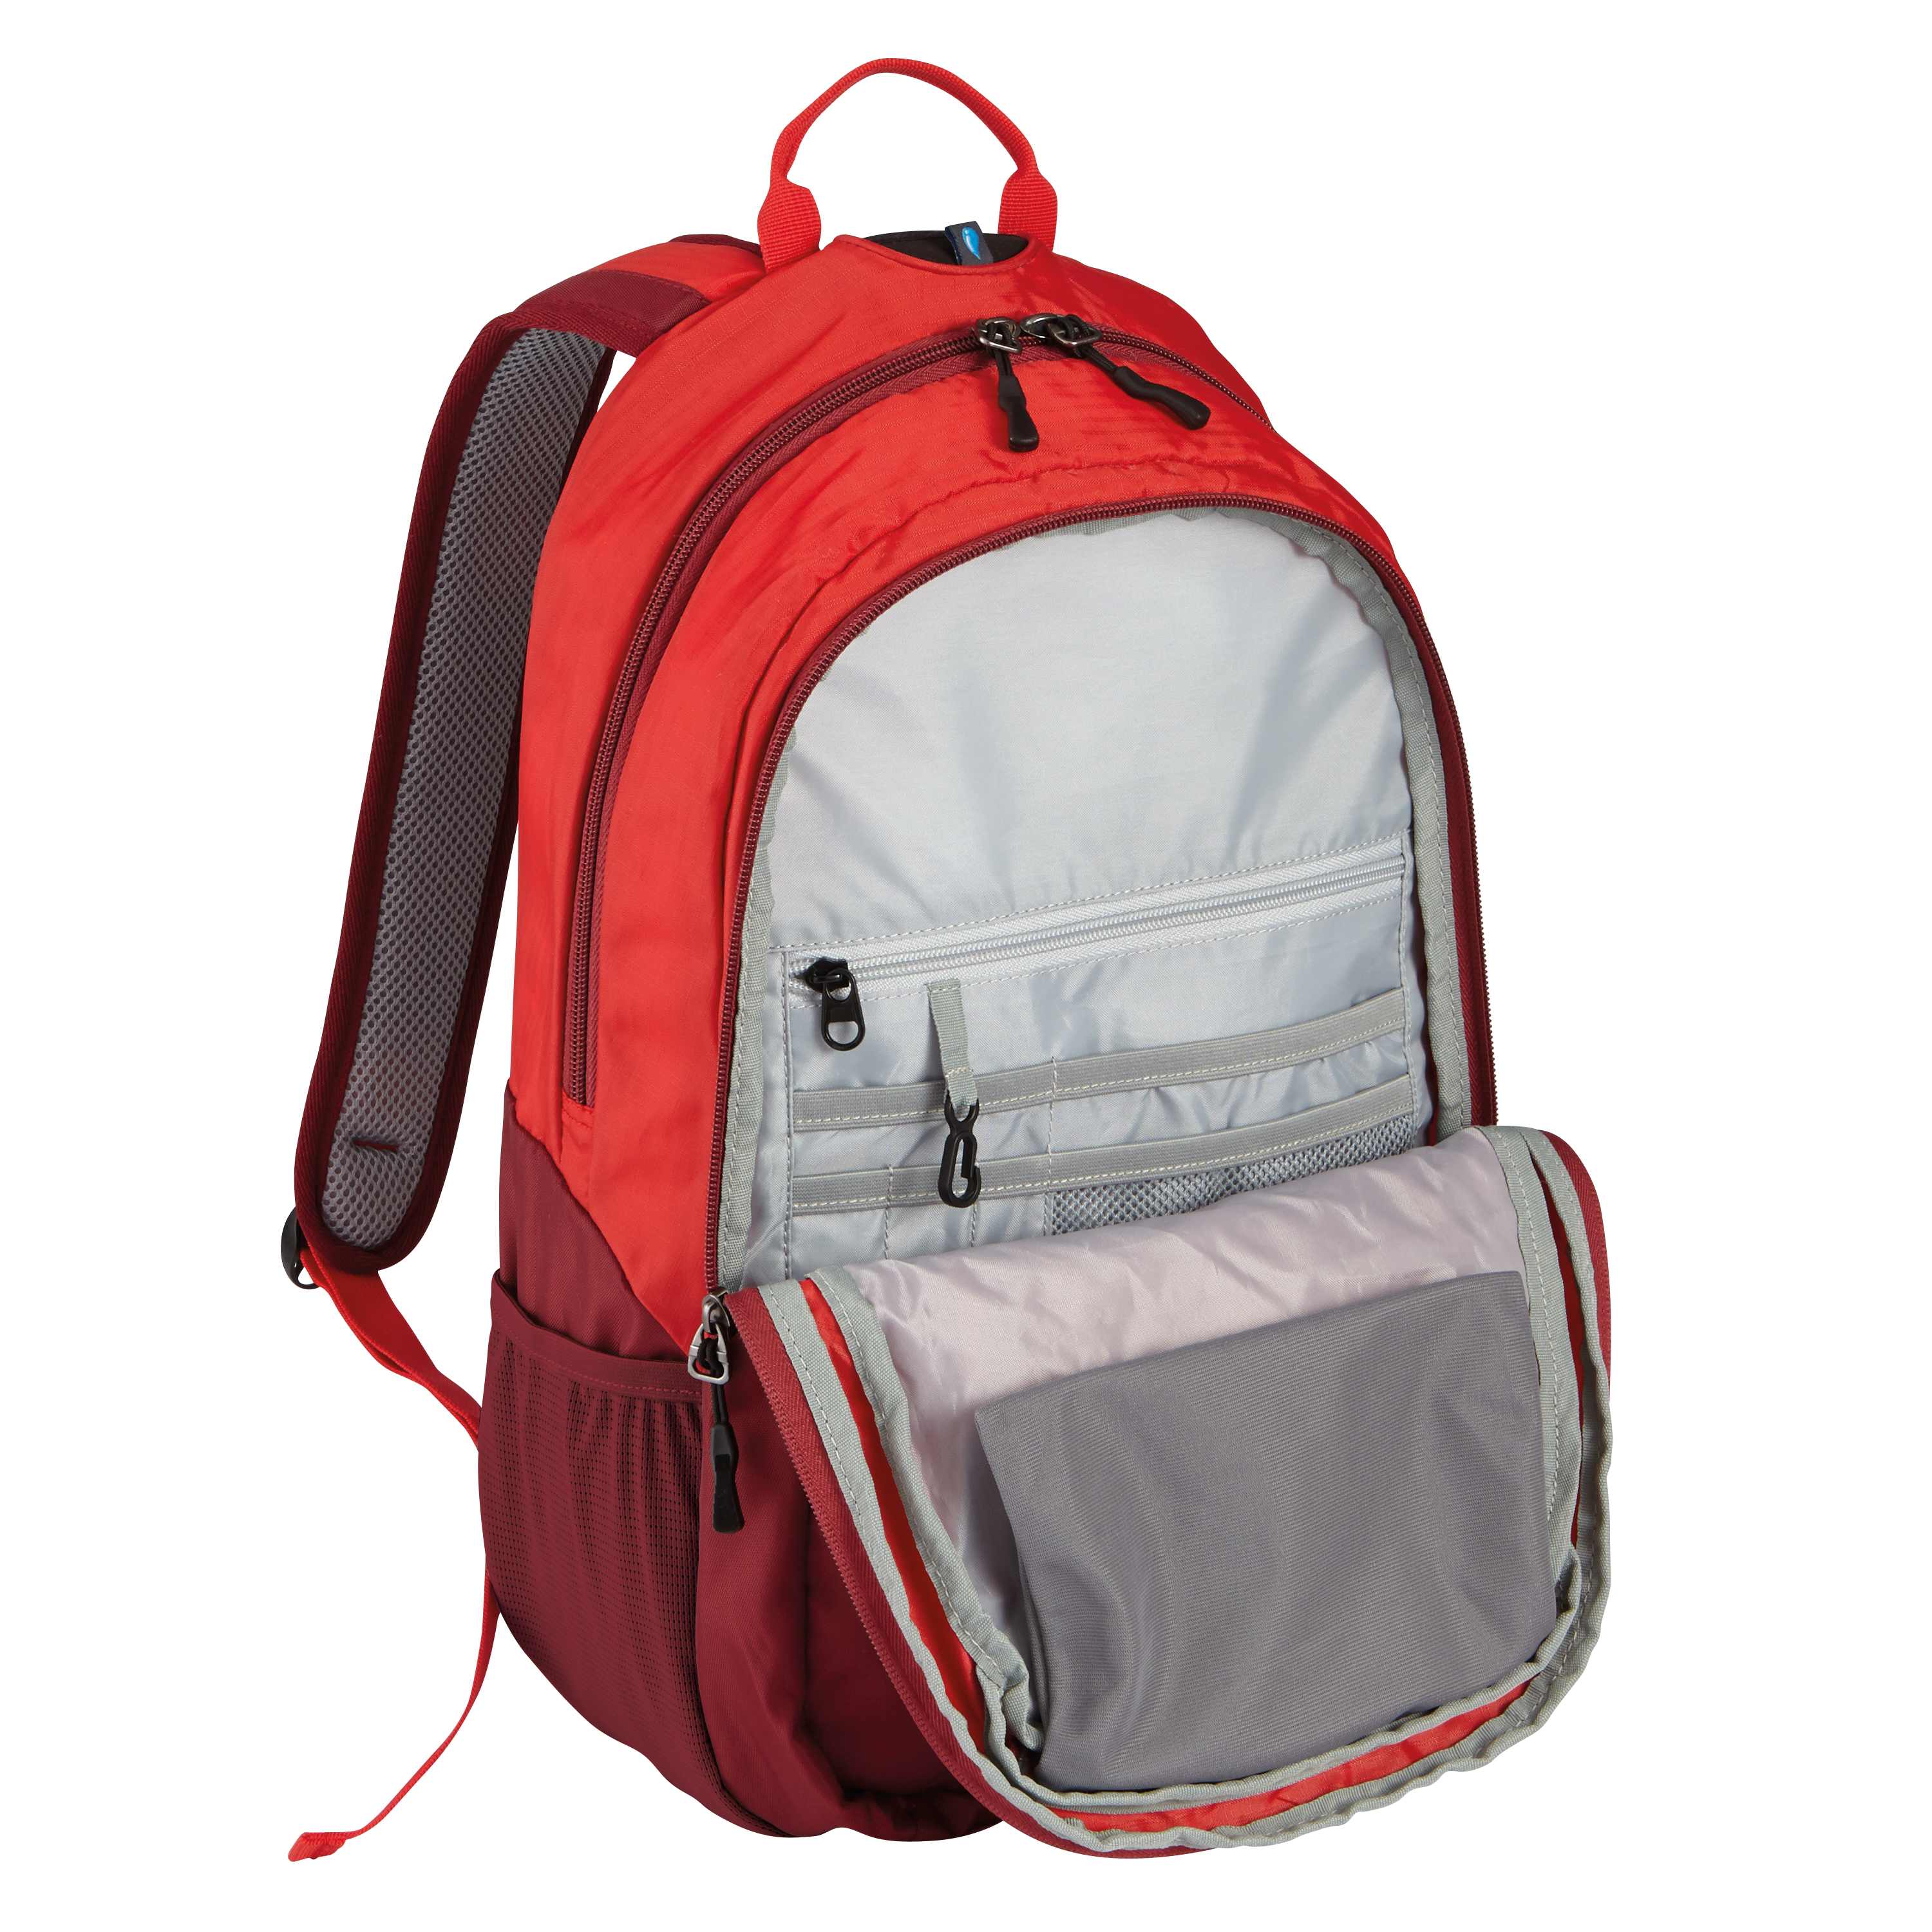 Ozark Trail 25L Stillwater Backpack, Hydration-Compatible, Red - image 4 of 4